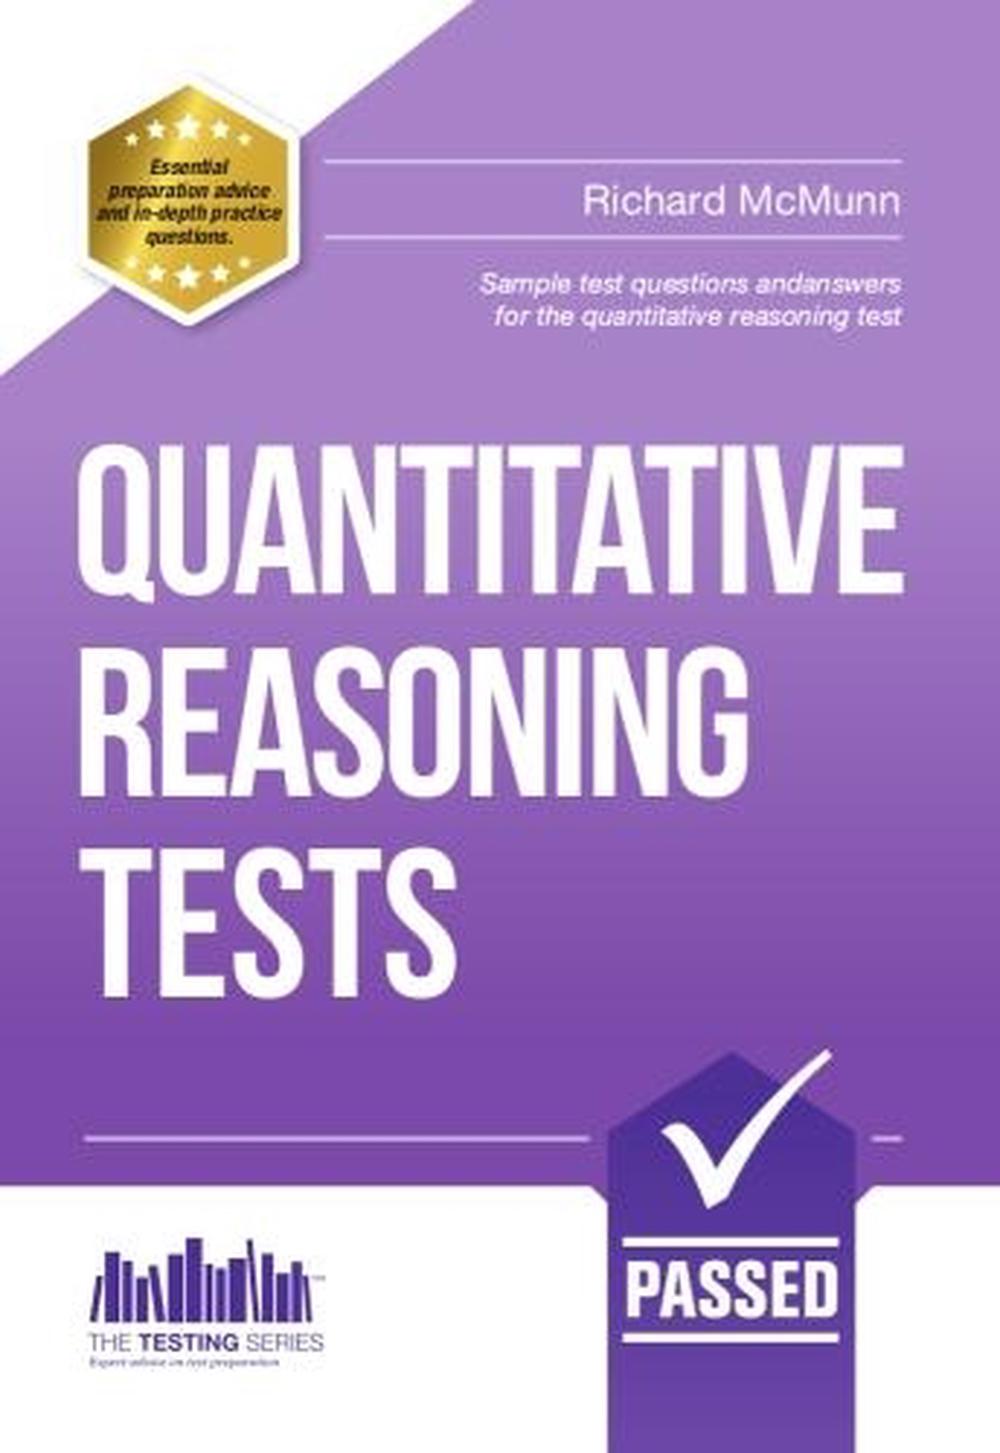 quantitative-reasoning-tests-by-richard-mcmunn-paperback-book-free-shipping-9781910202470-ebay